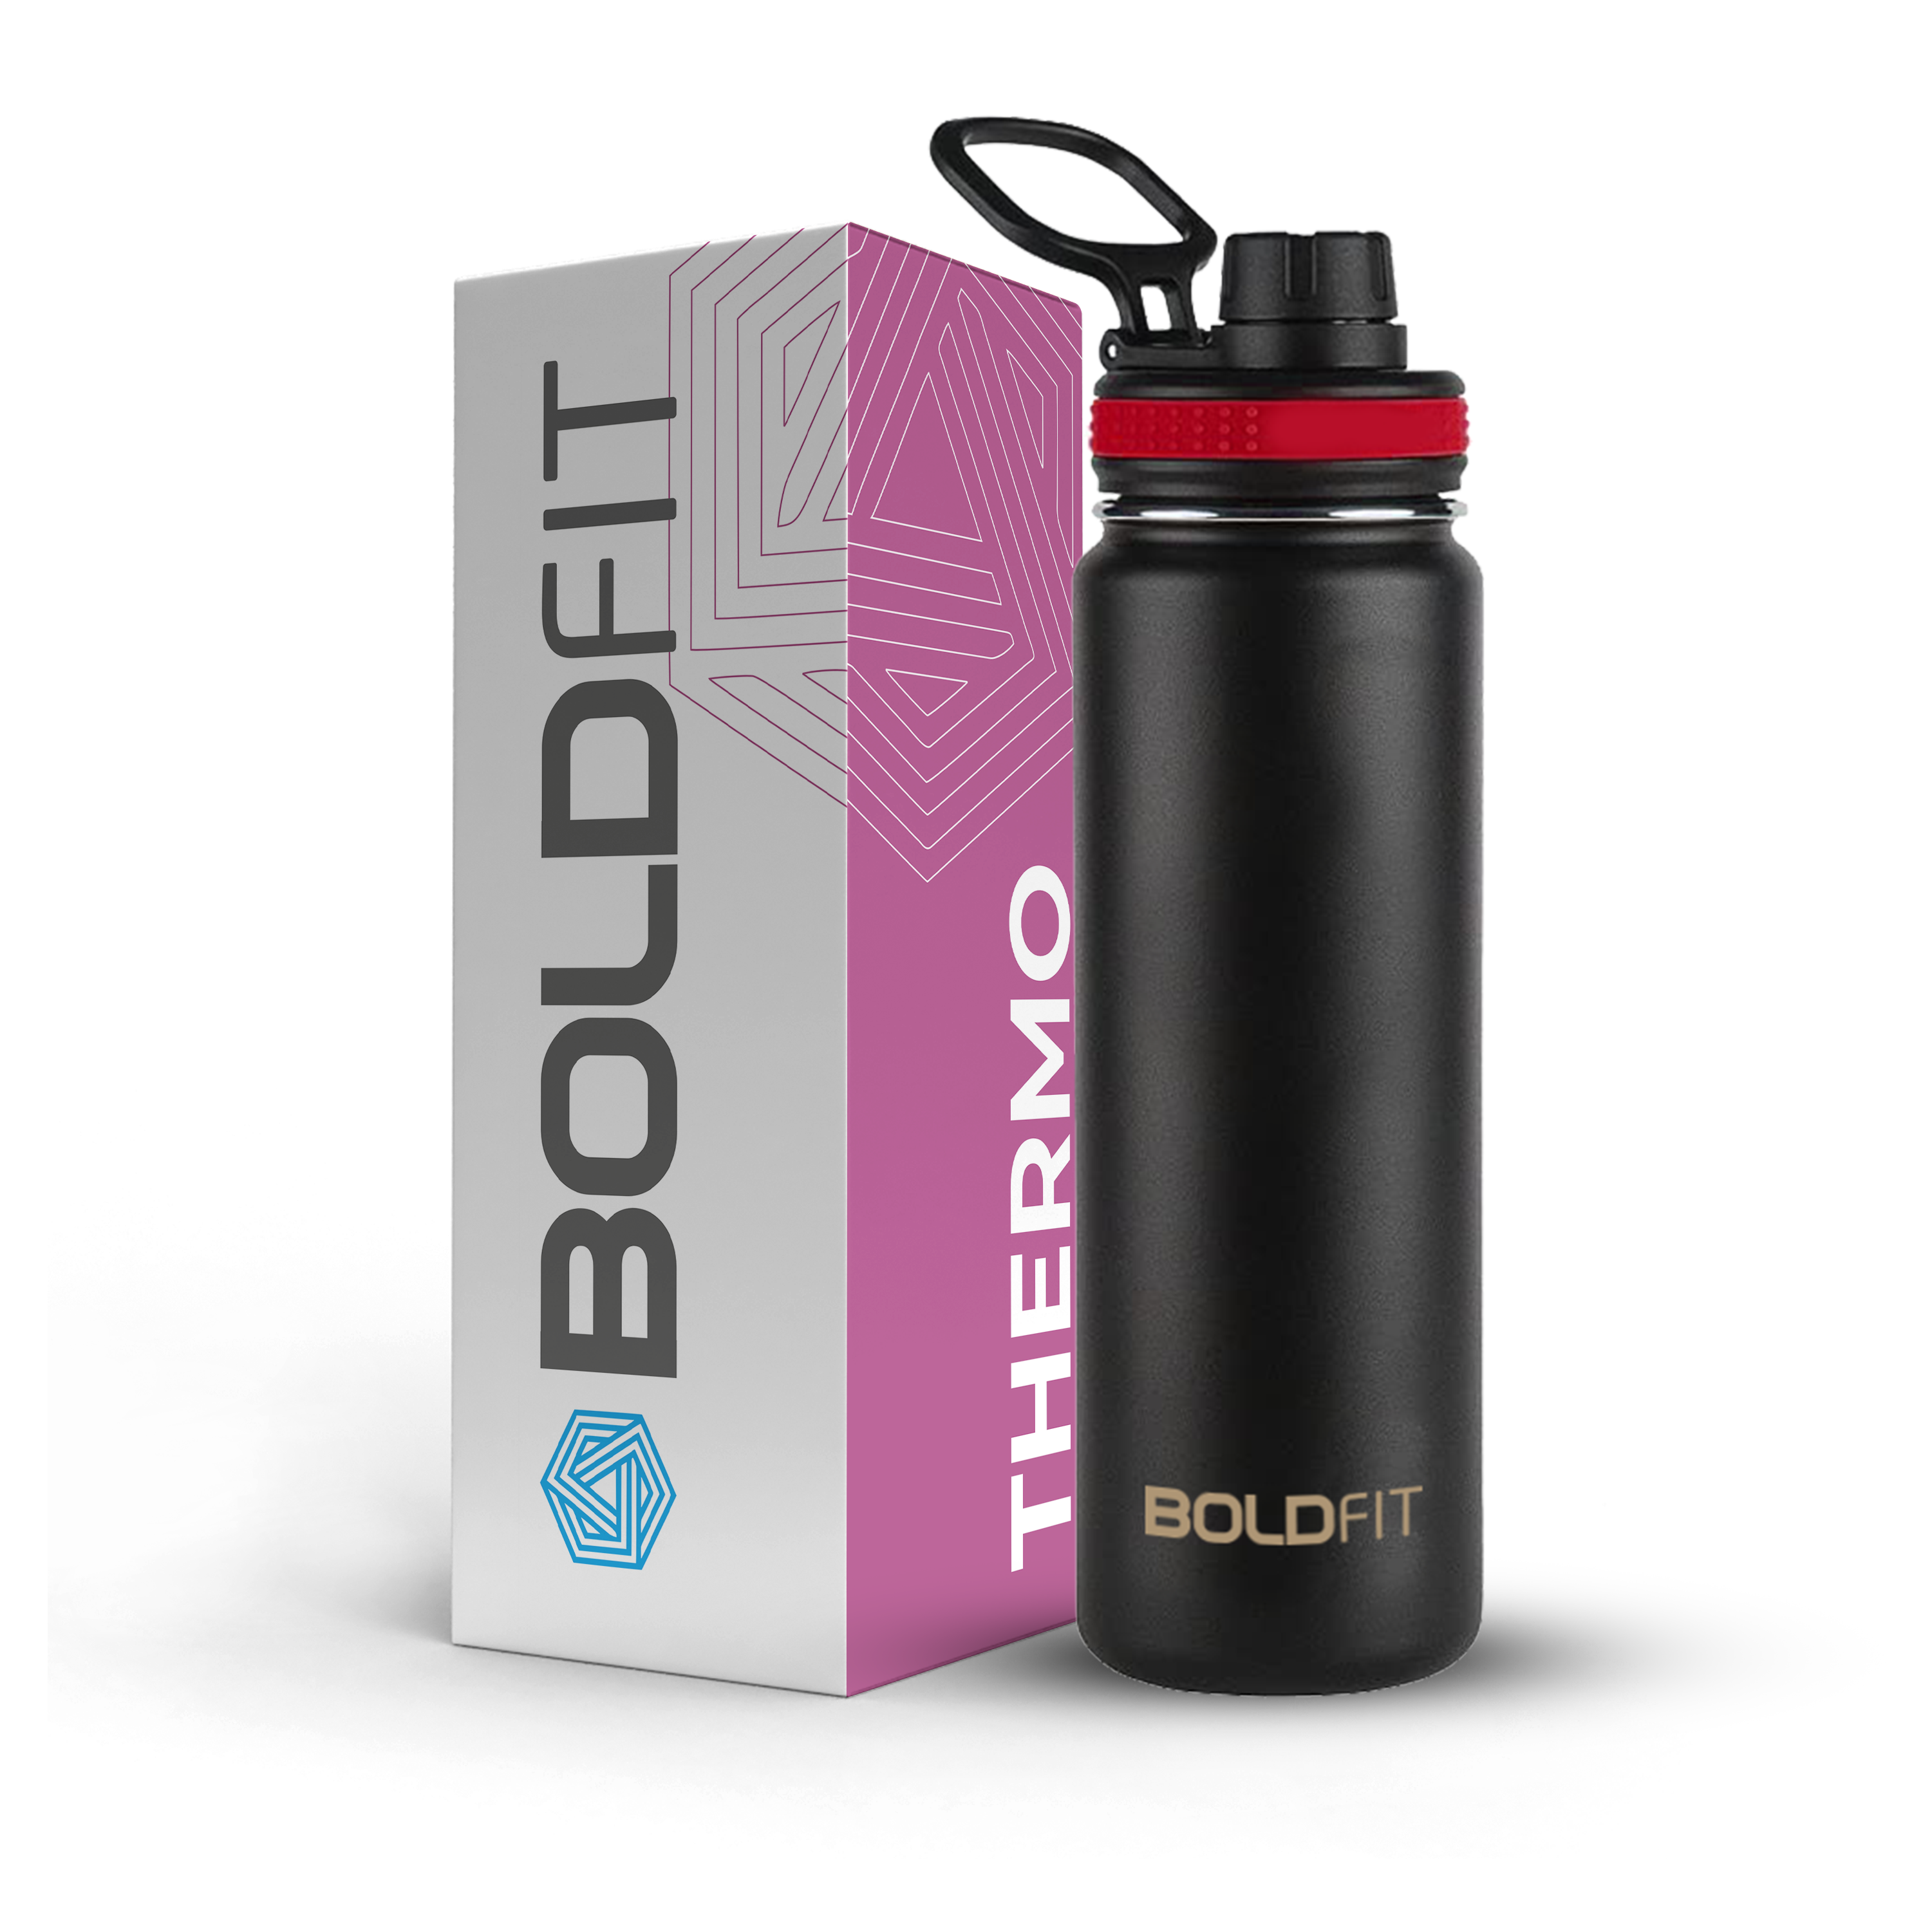 Boldfit Stainless Steel Hydra Water Bottle - 750ml